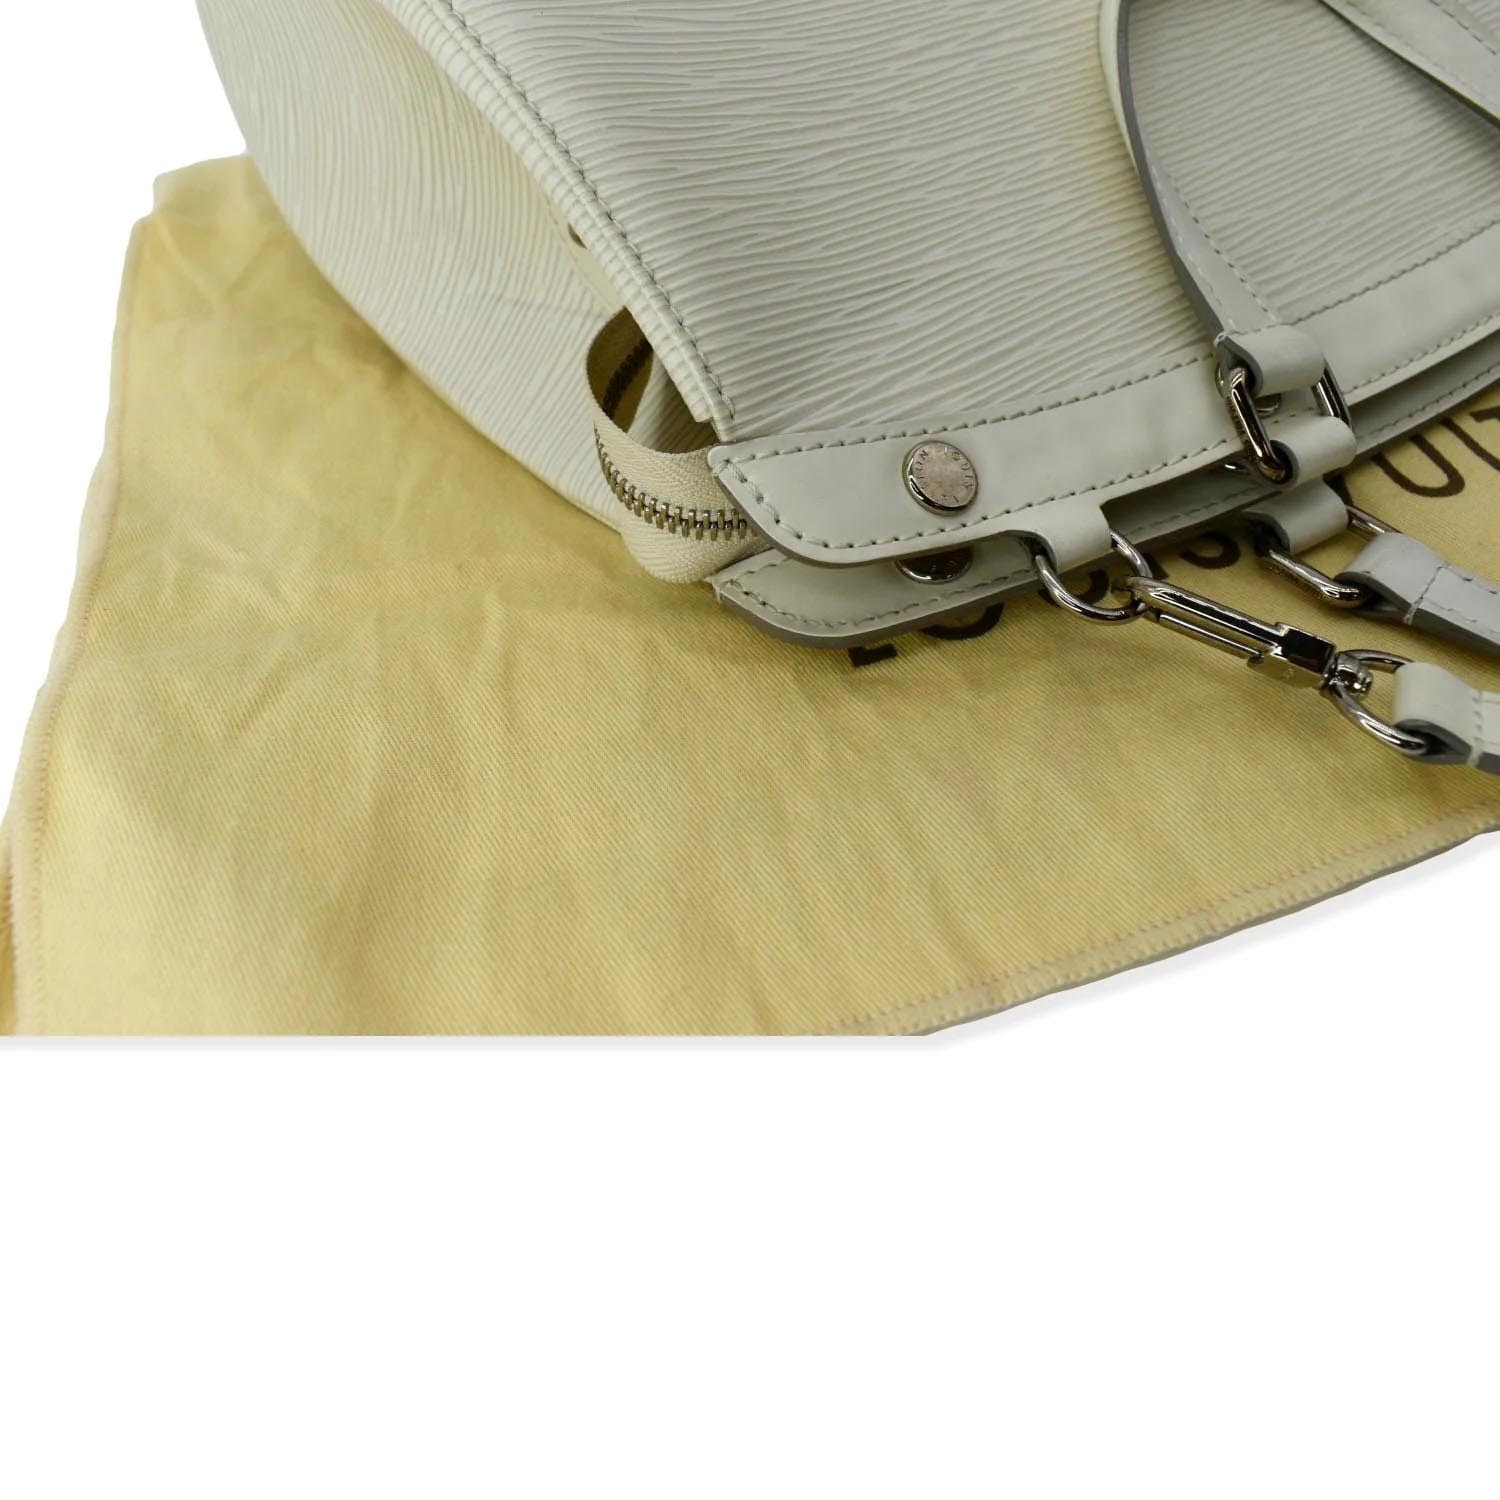 LOUIS VUITTON Brea MM Epi Leather Satchel Shoulder Bag Ivory-US